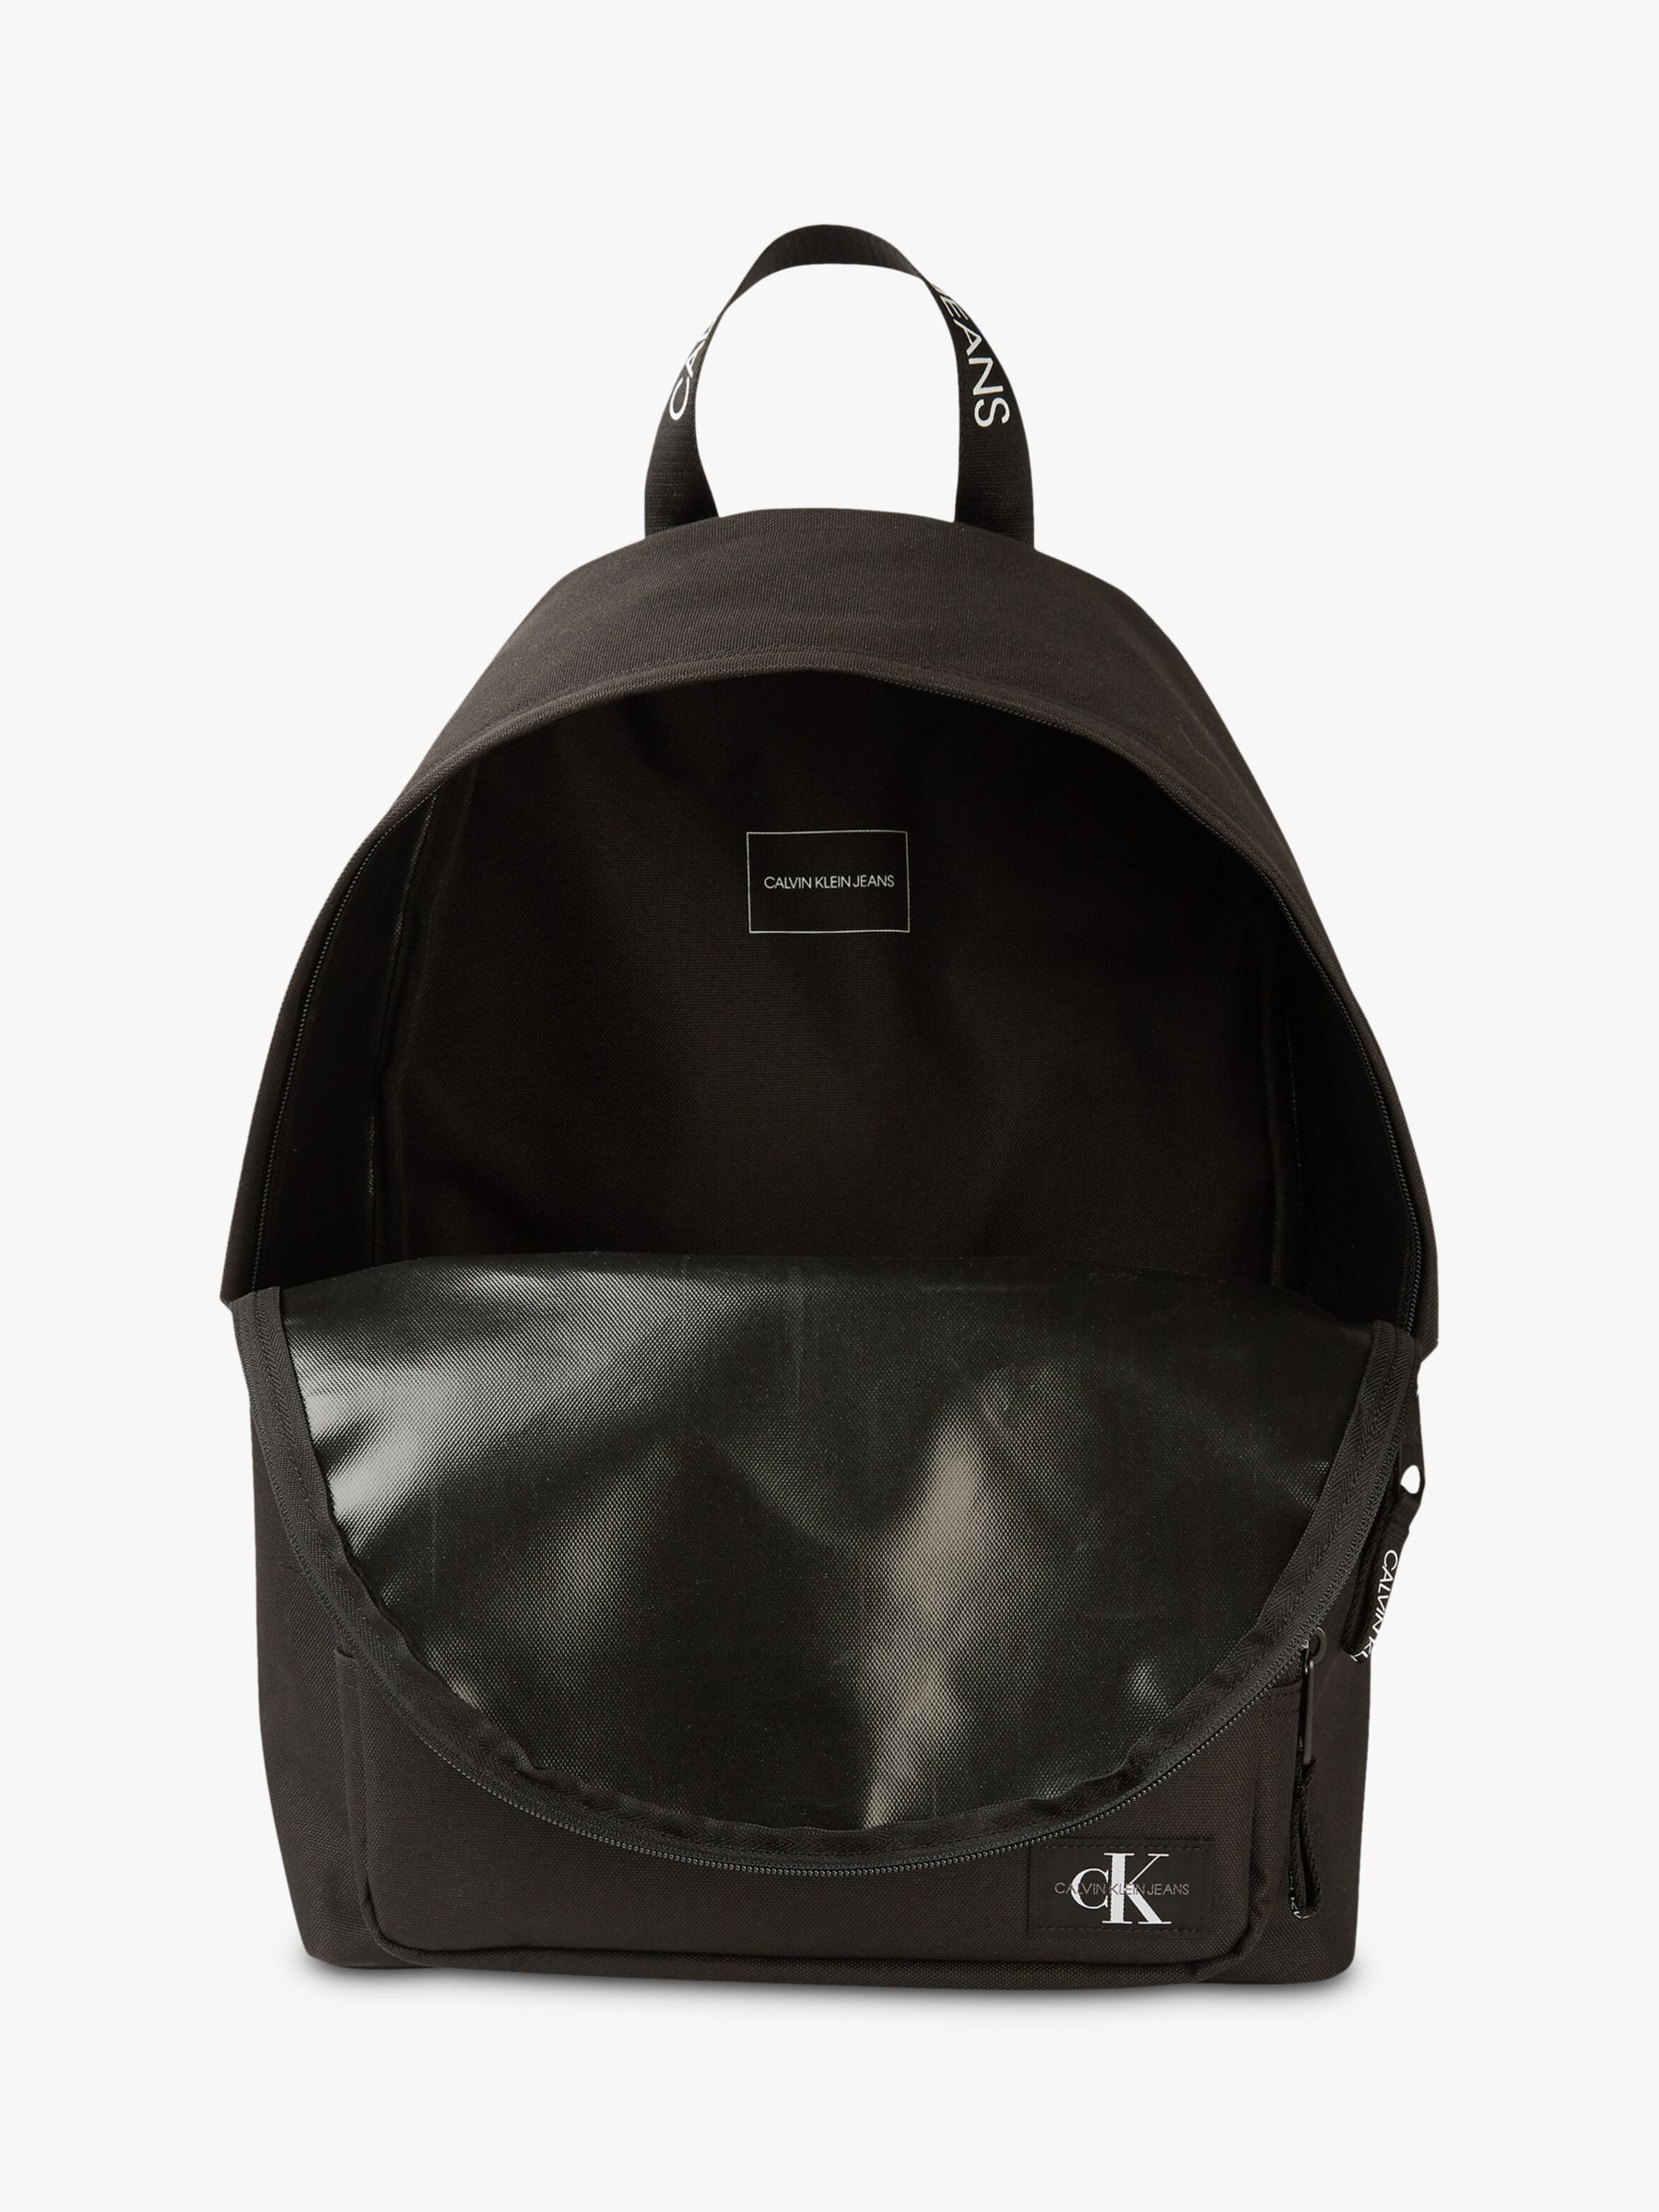 Calvin Klein Jeans Campus Backpack, Black at John Lewis & Partners